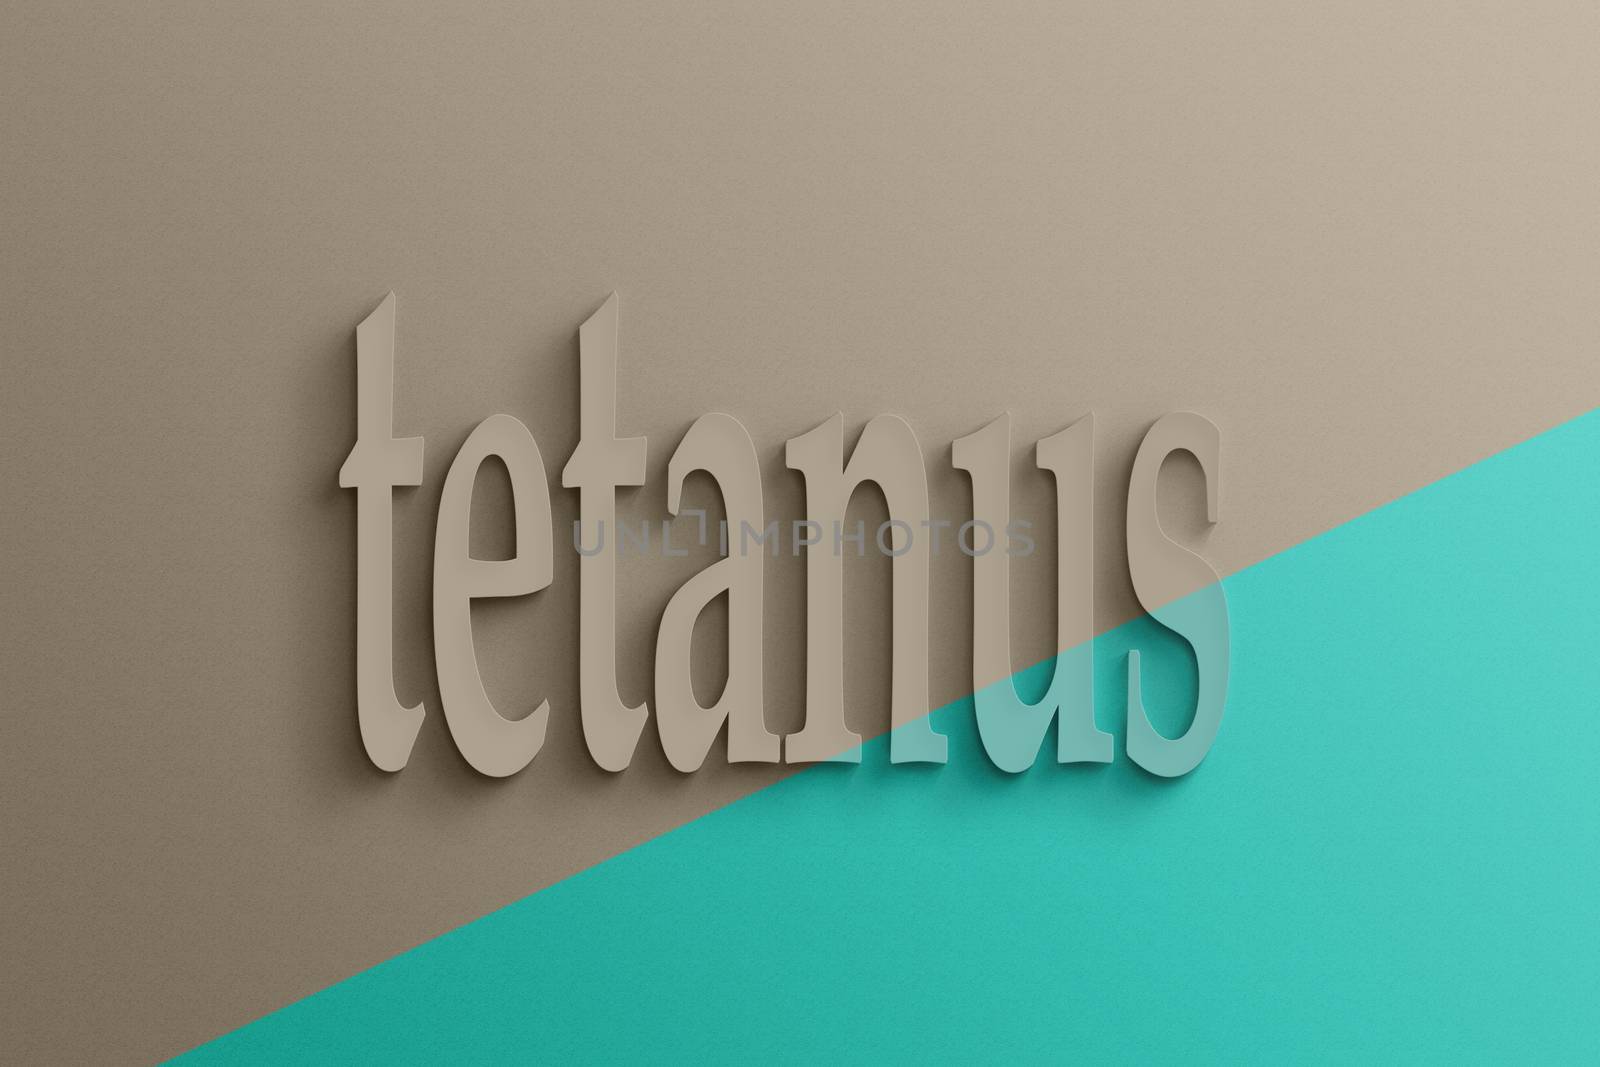 3d text of tetanus by elwynn